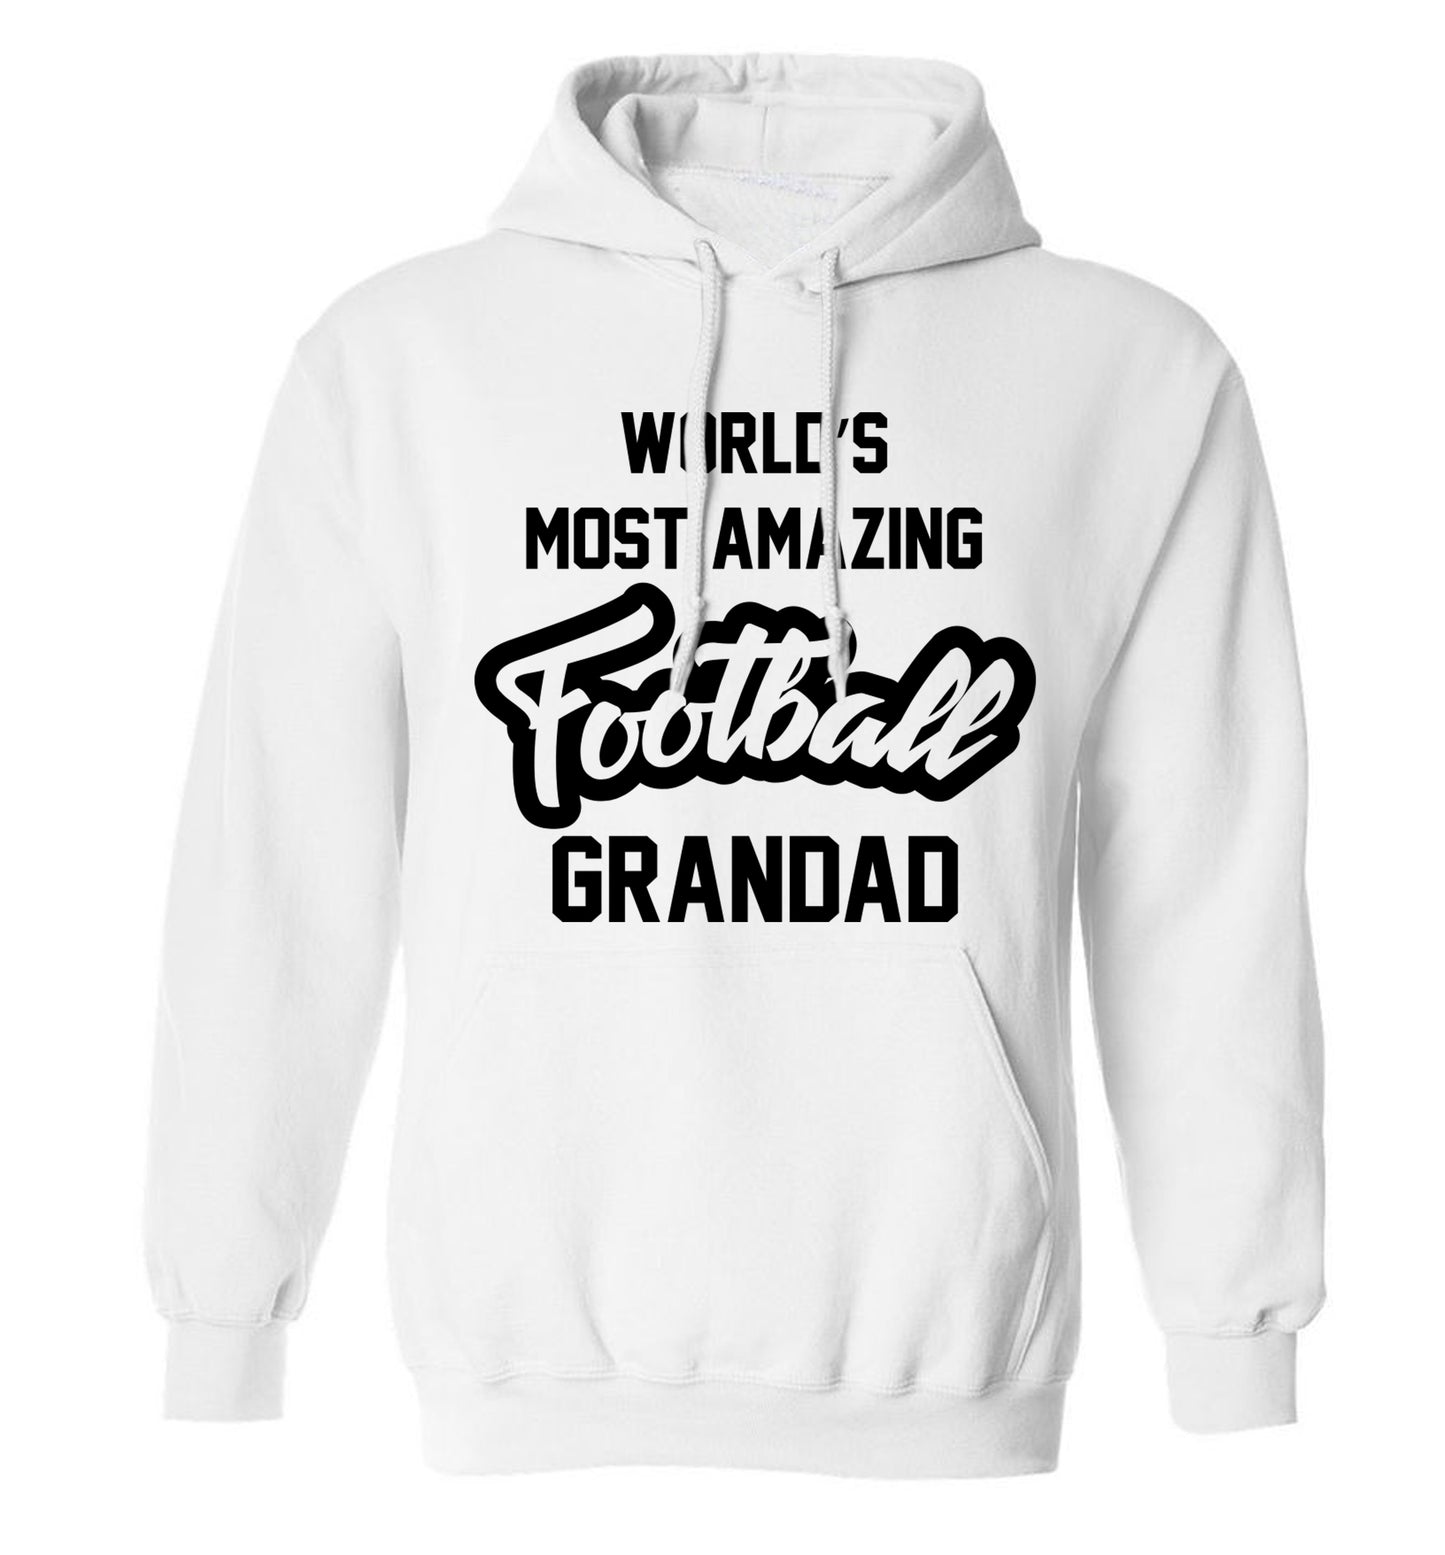 Worlds most amazing football grandad adults unisexwhite hoodie 2XL